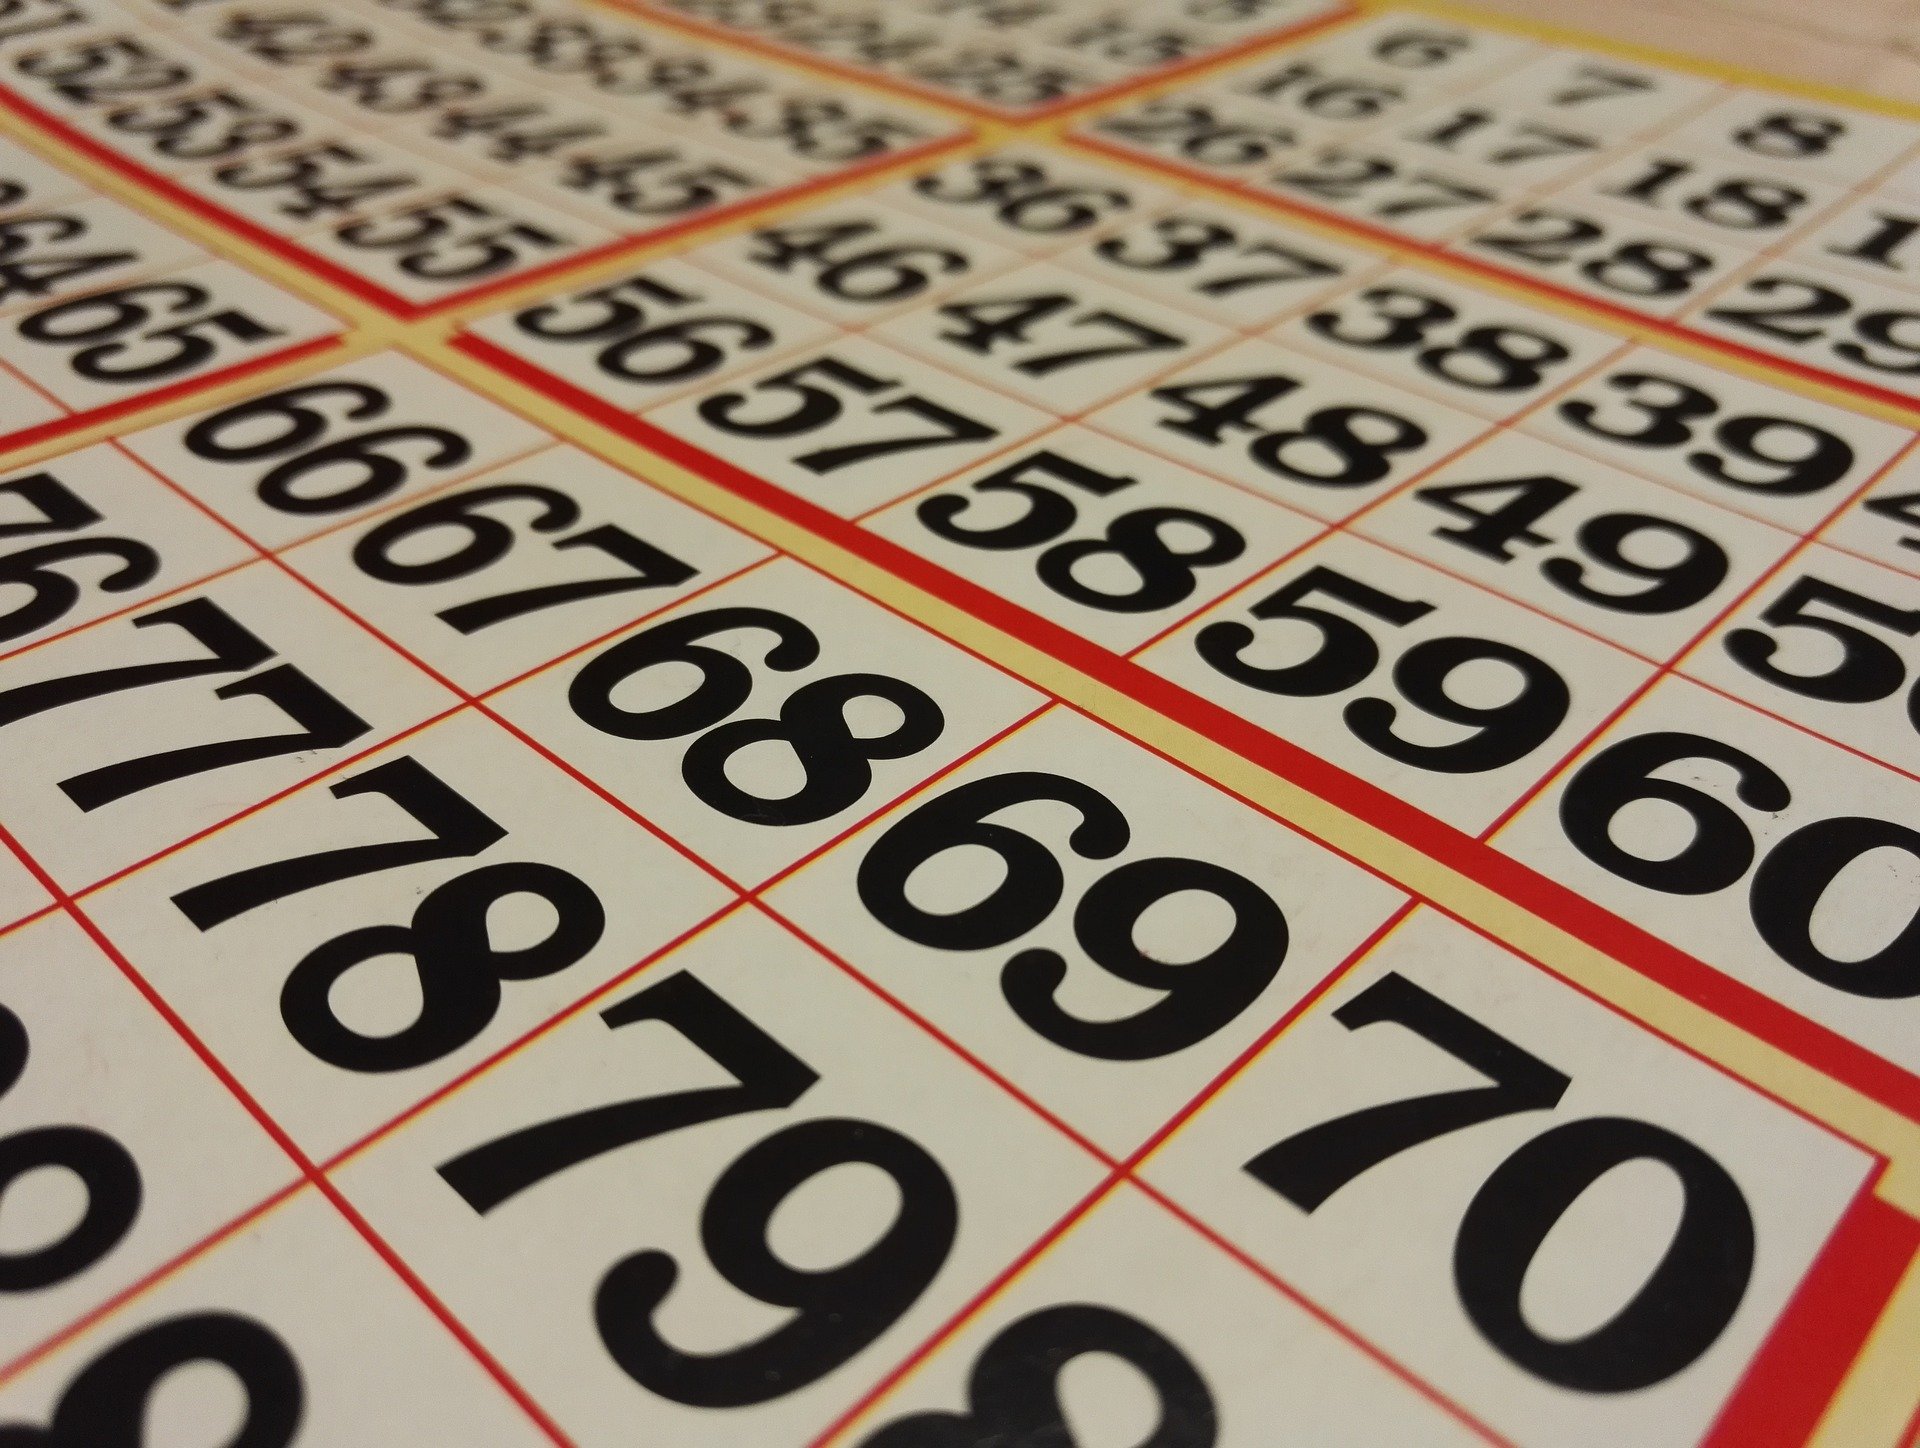 Bingo card with numbers (source: Samueles, Pixabay)